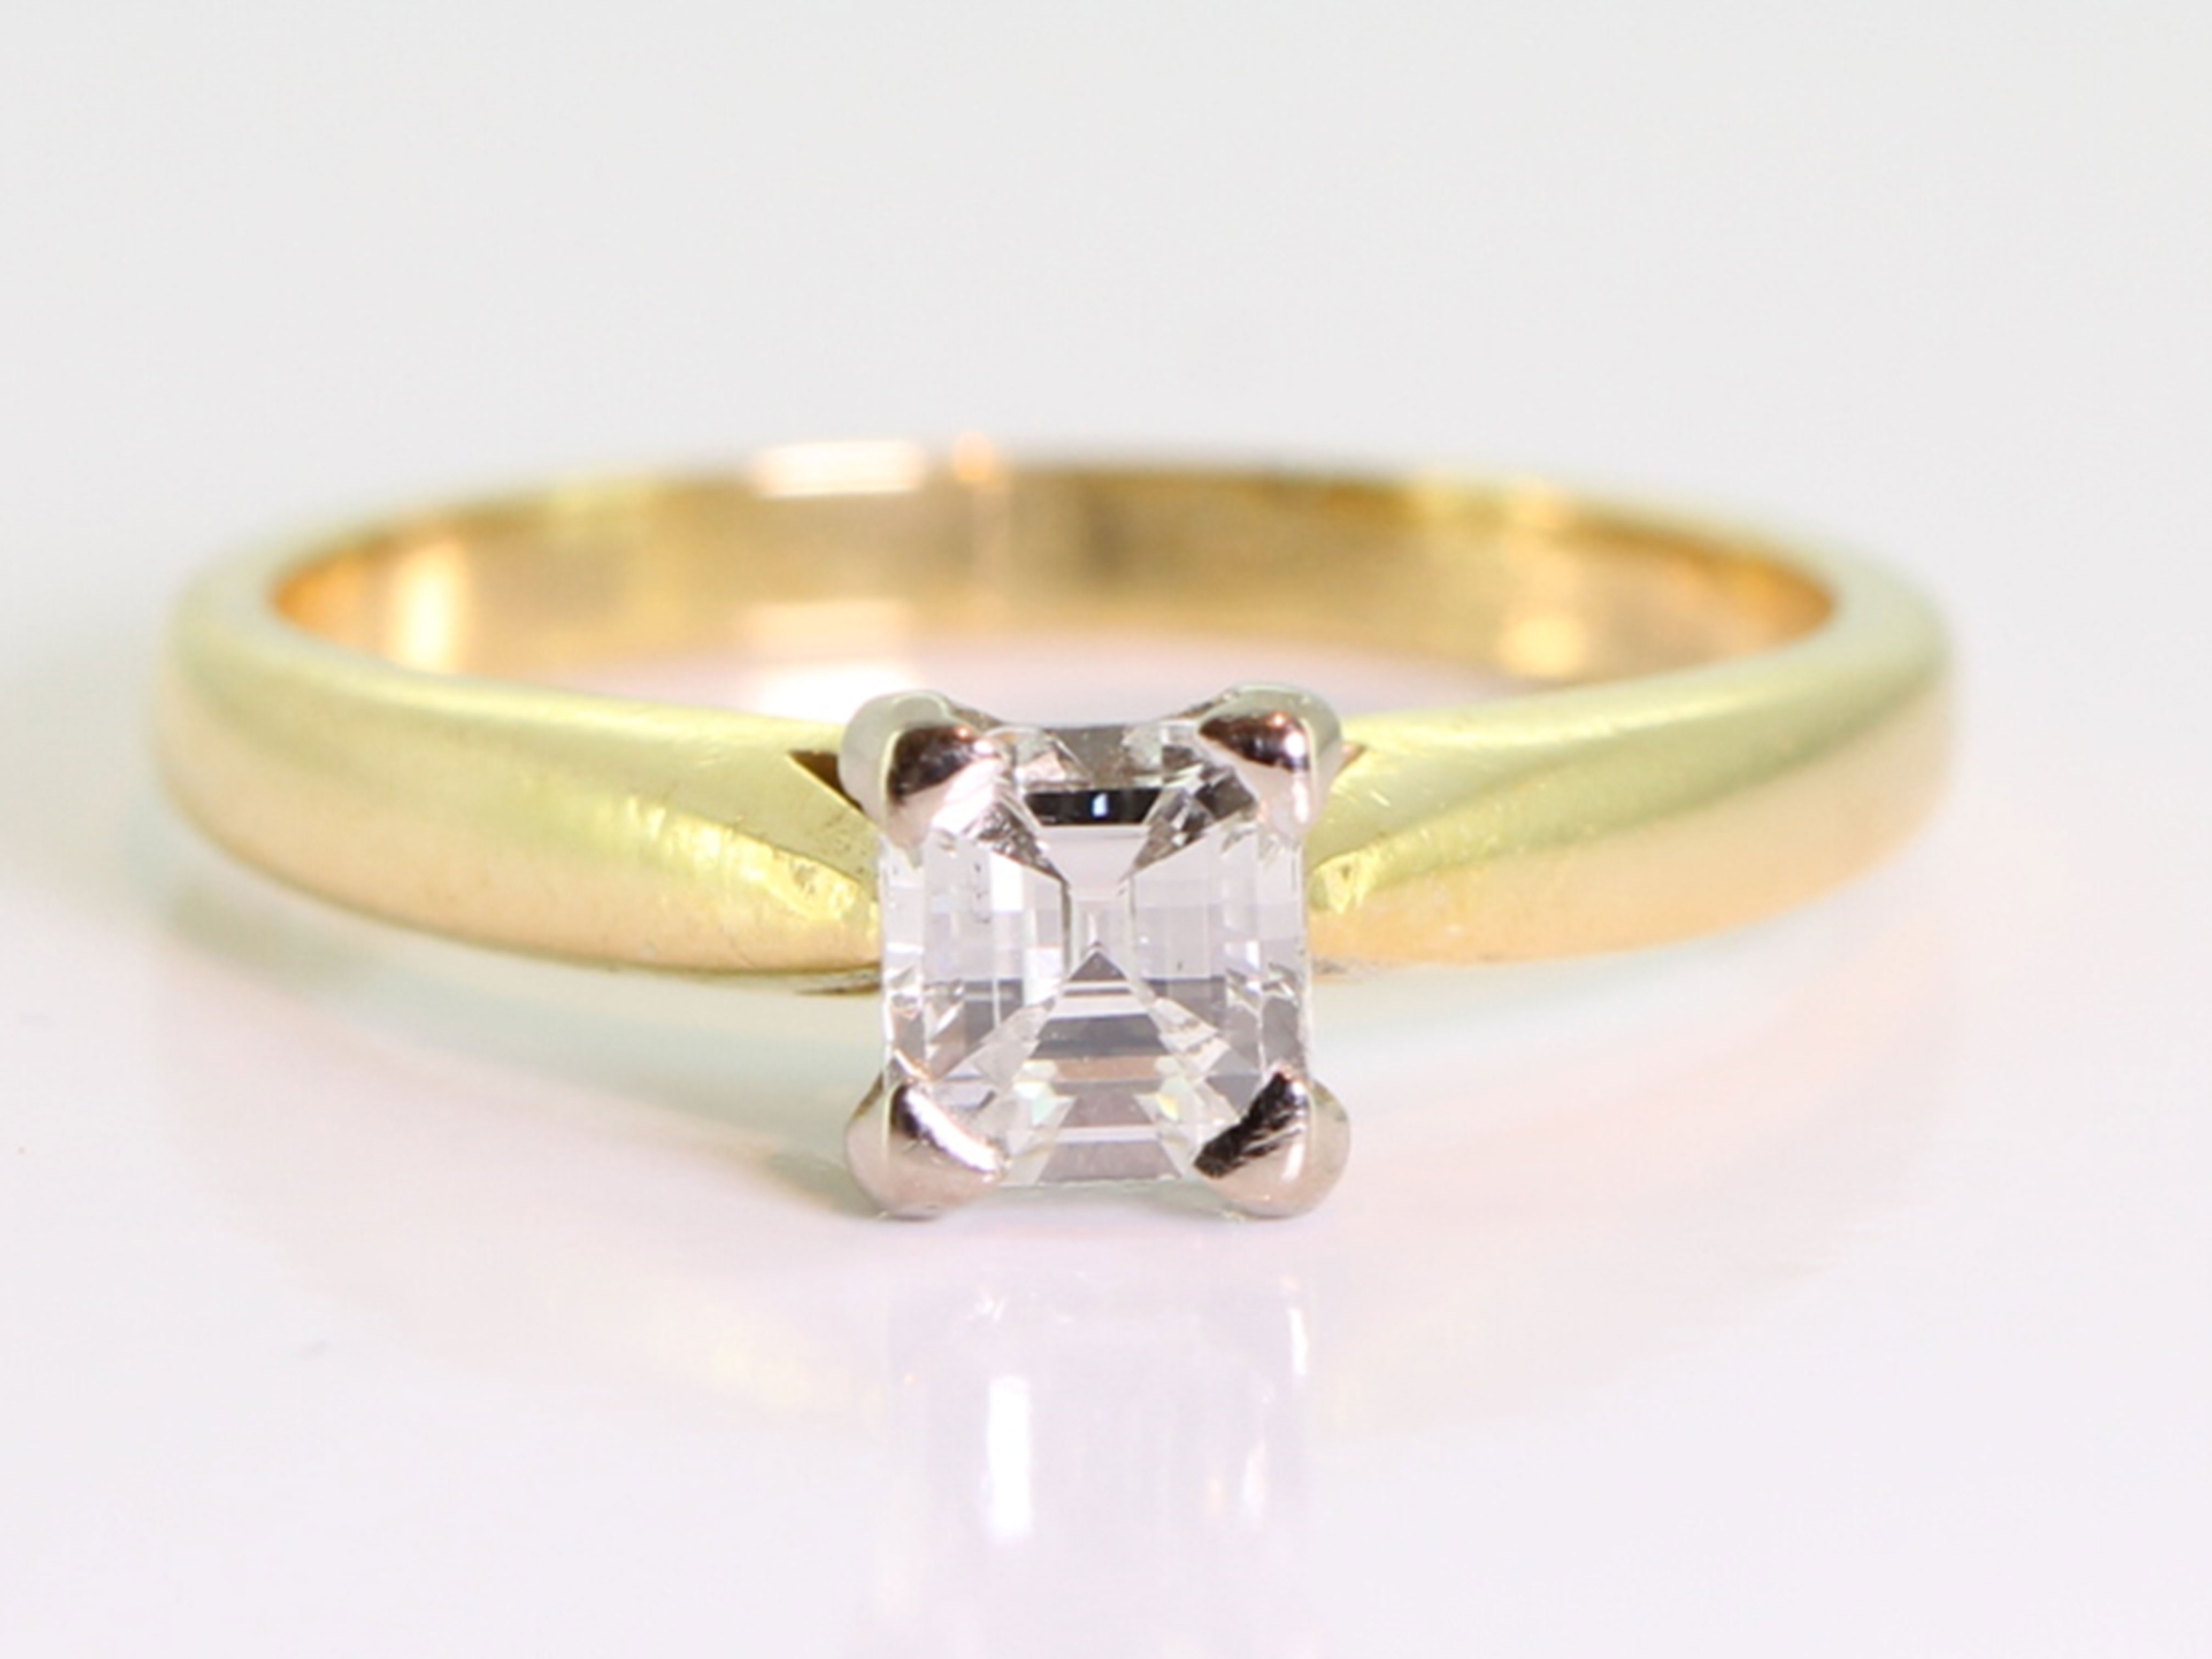  limited edition mellennium cut diamond 18 carat gold ring